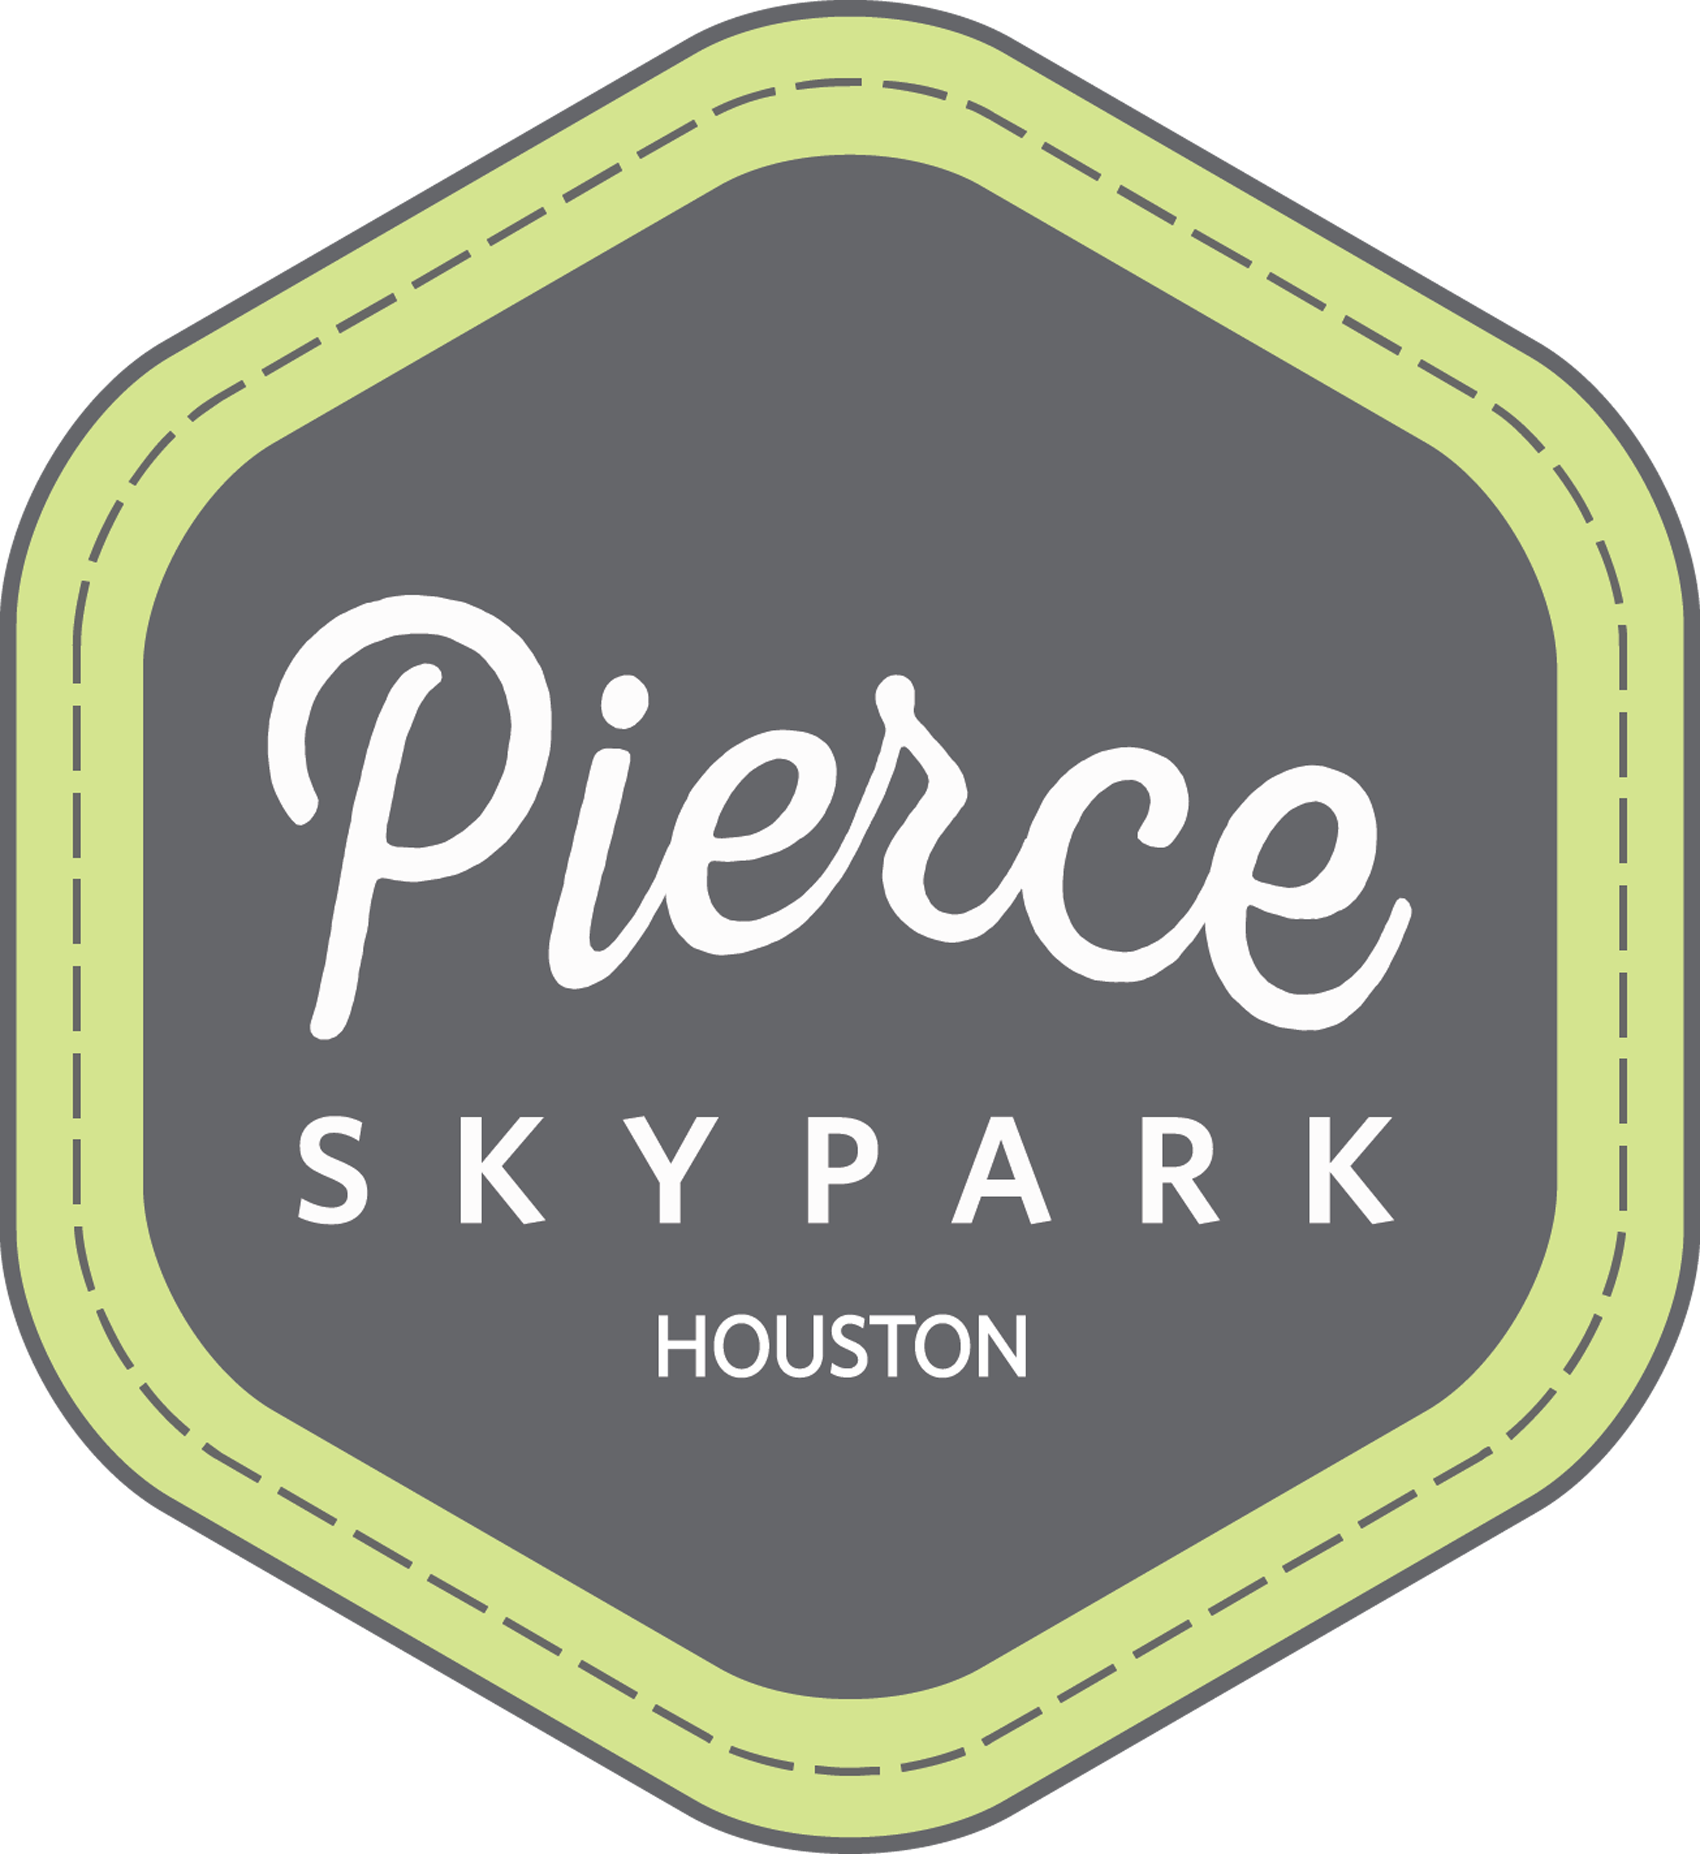 Pierce Sky Park